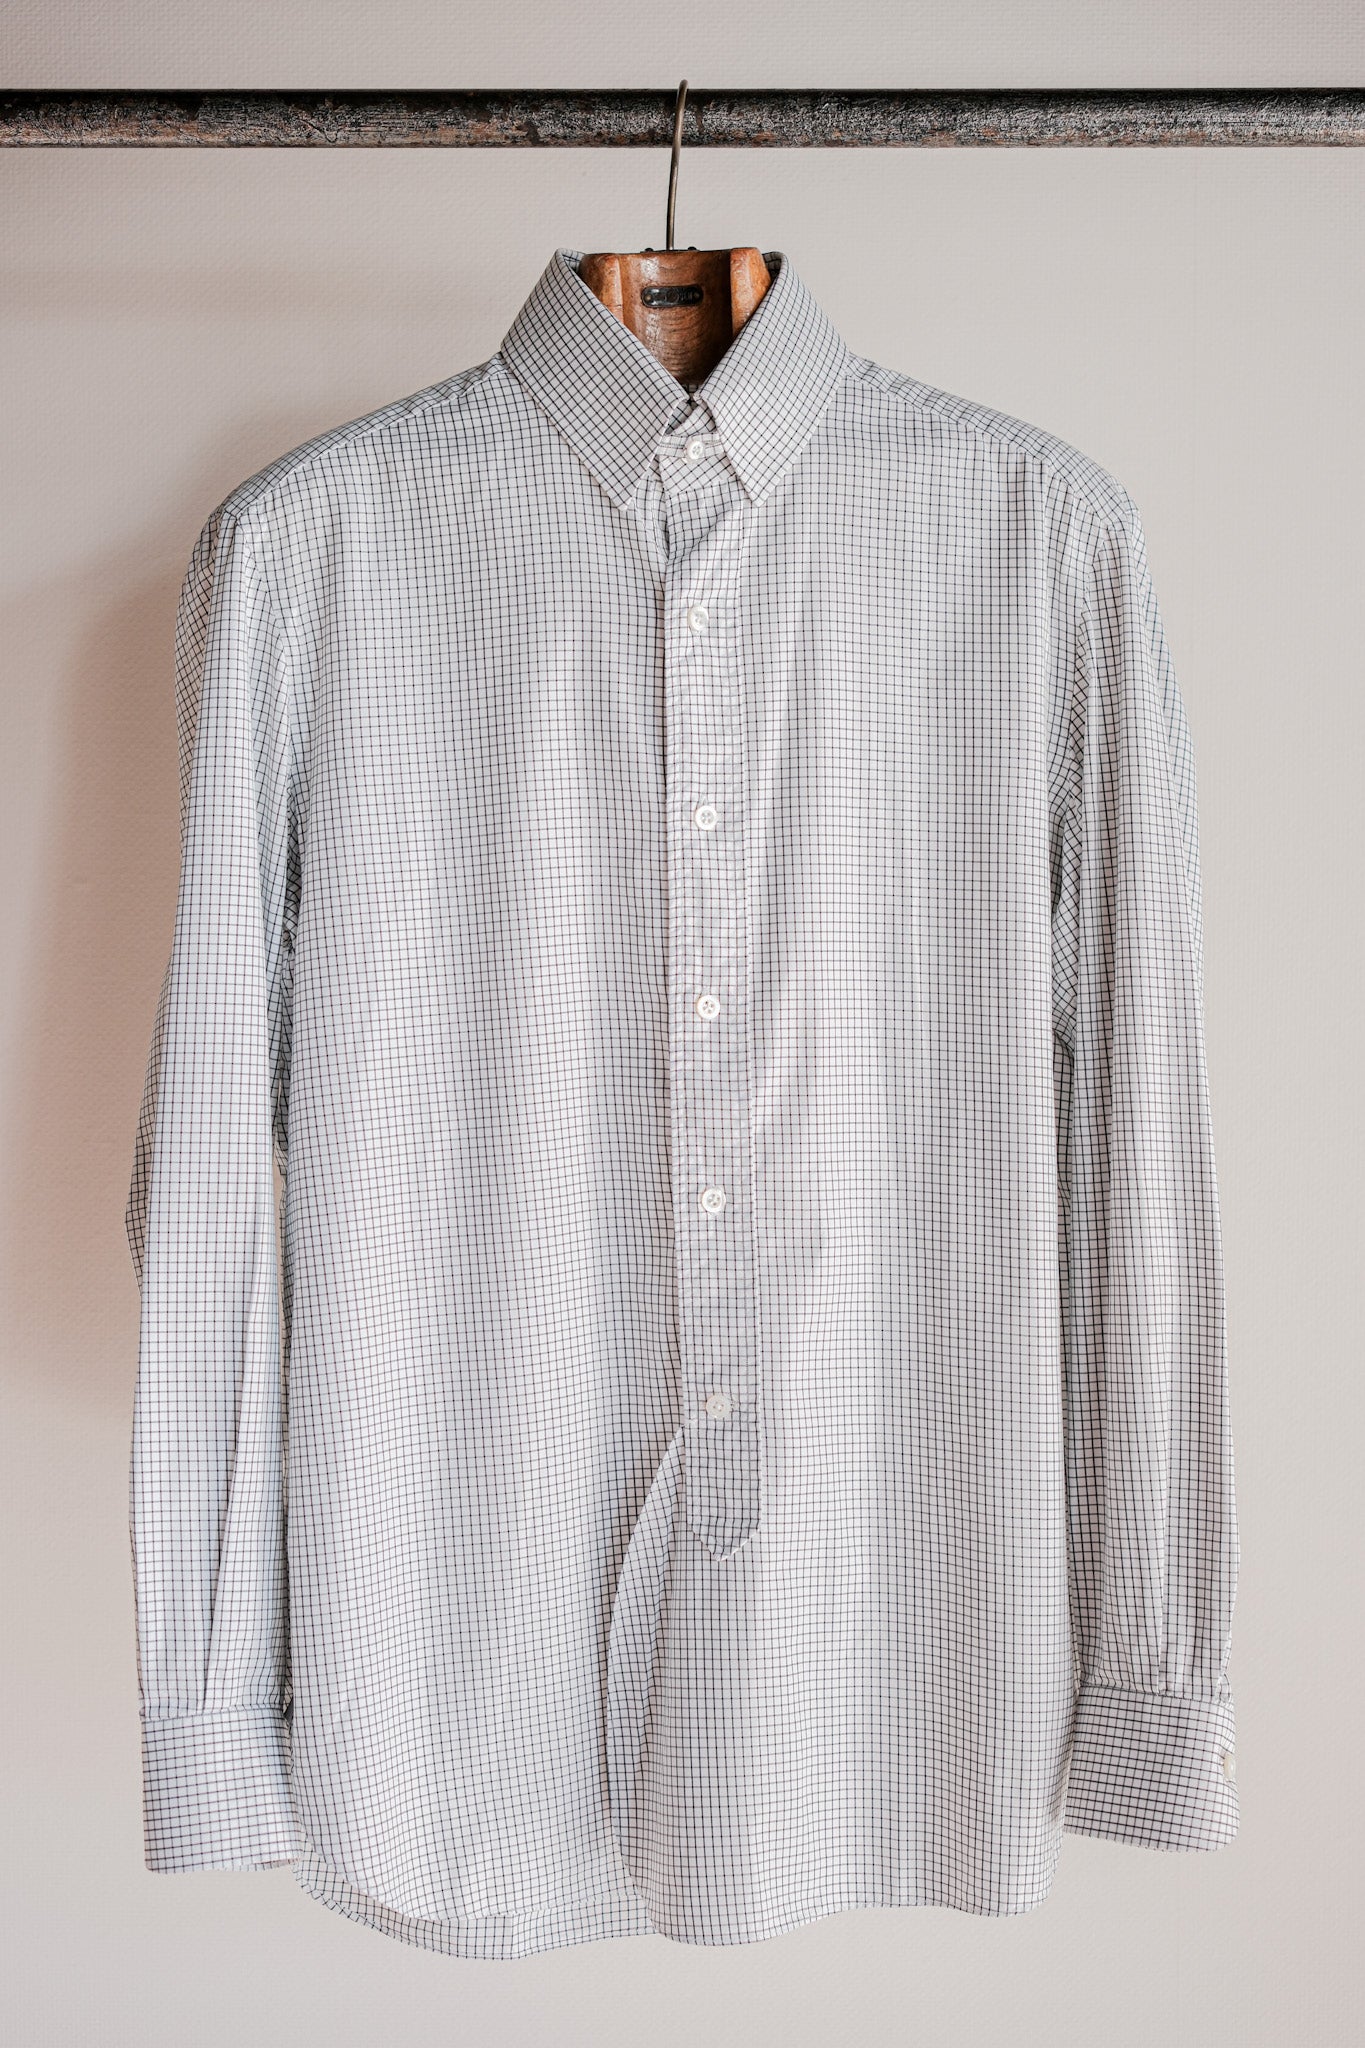 【~00's】Old ARNYS PARIS Cotton Checked Dress Shirt Size.39